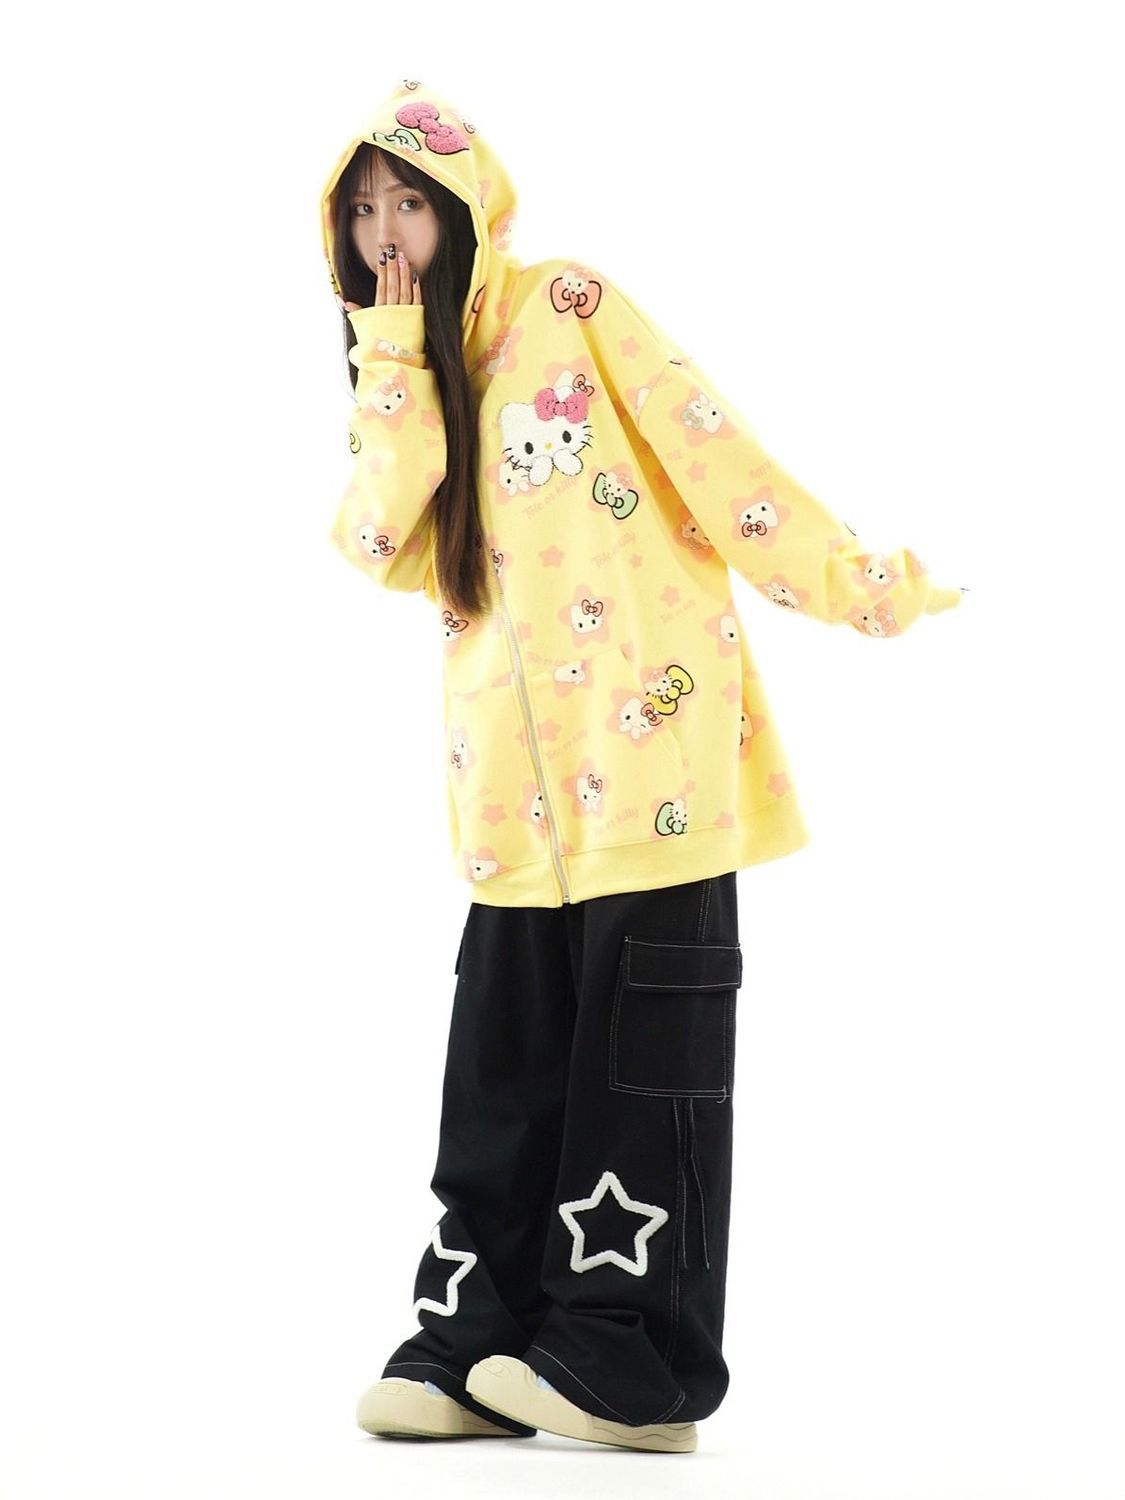 Chinese trendy American cartoon sweet girl style full printed Hello Kitty cardigan zipper hooded sweatshirt for men and women heavy cotton jacket